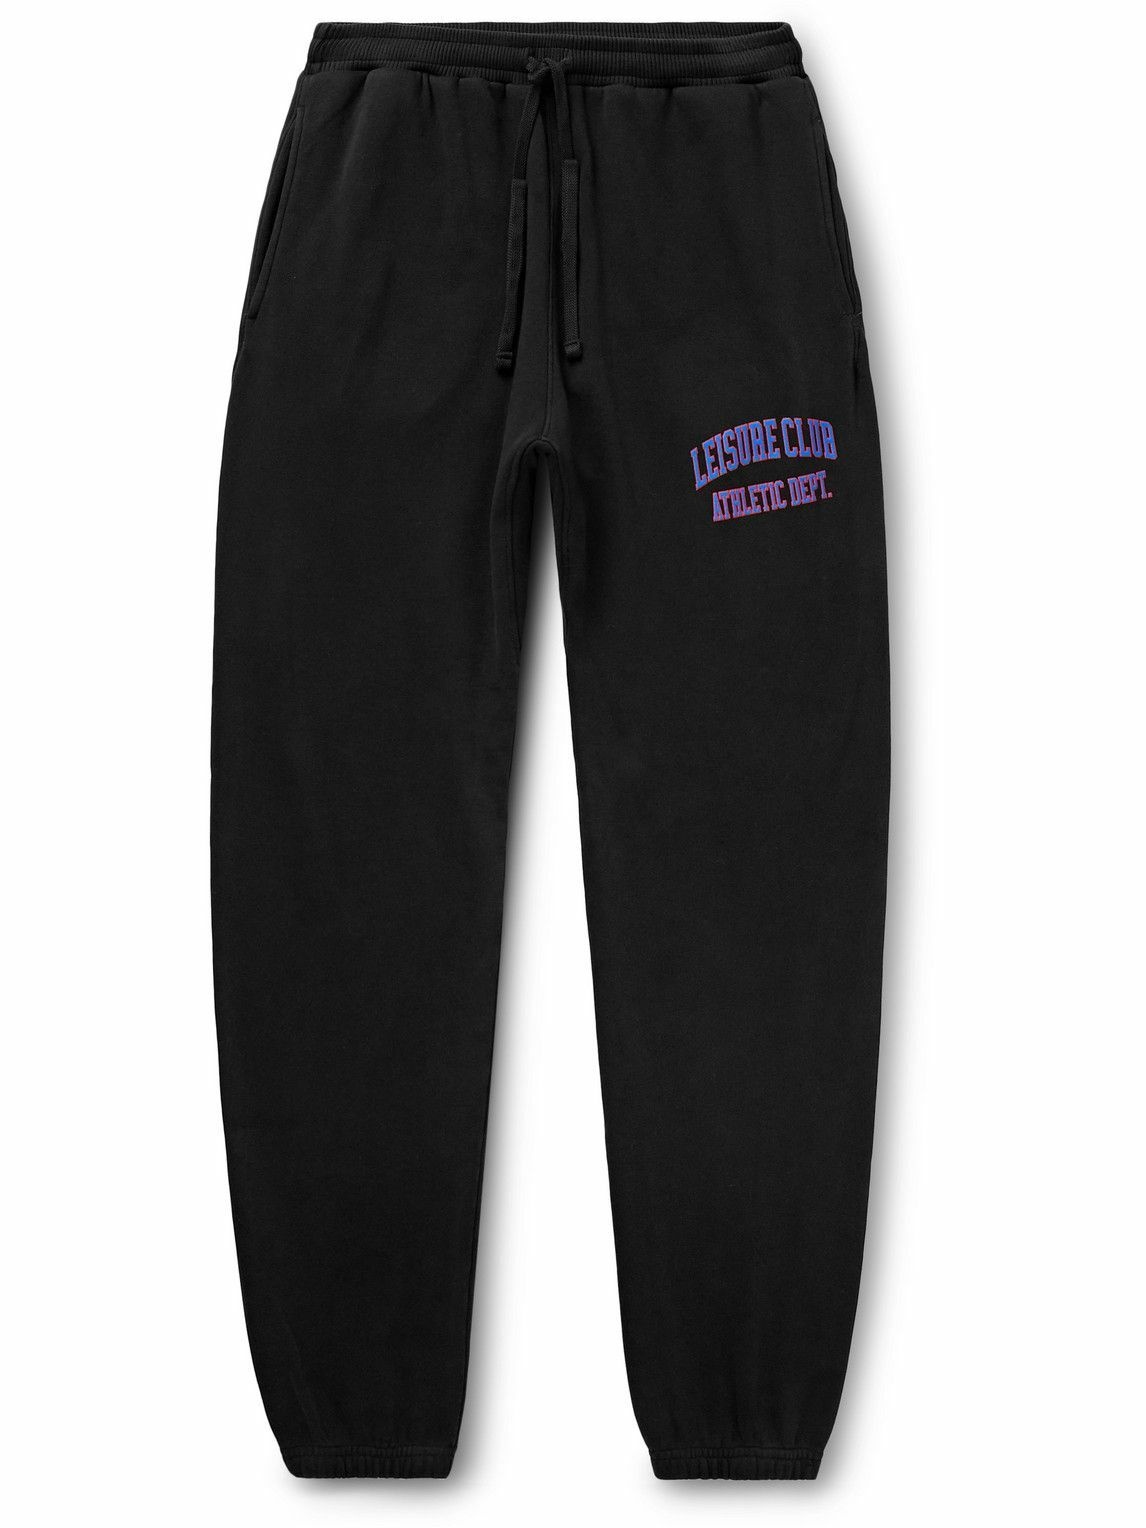 Photo: Pasadena Leisure Club - Athletic Dept. Tapered Logo-Print Garment-Dyed Cotton-Jersey Sweatpants - Black